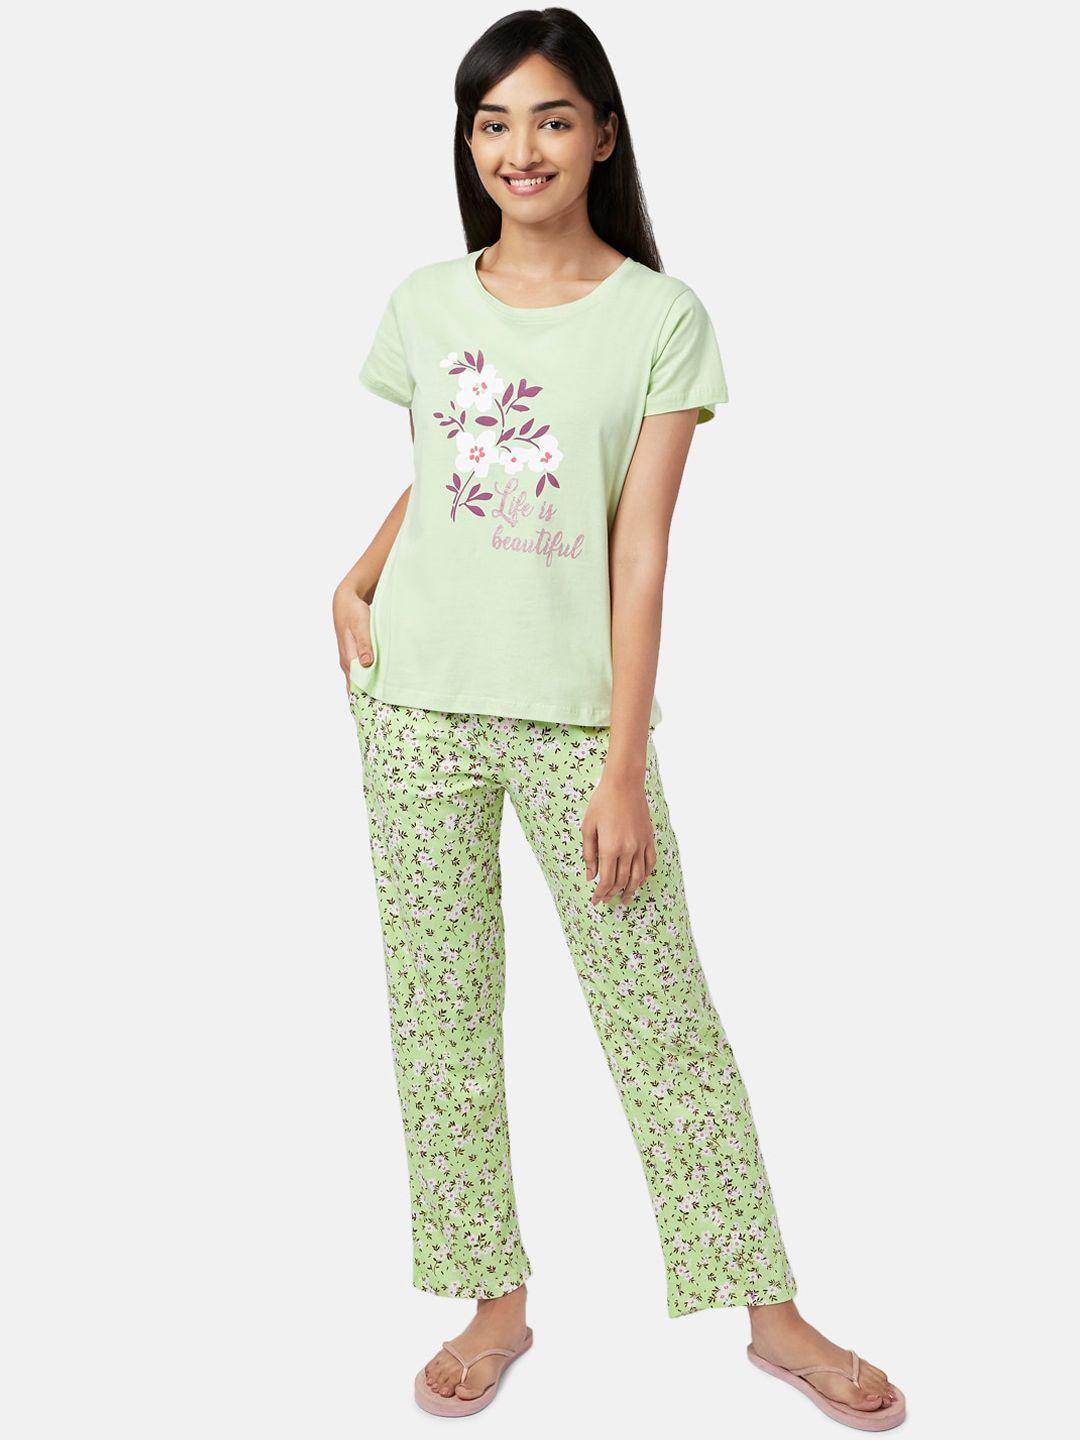 yu by pantaloons women green printed night suit